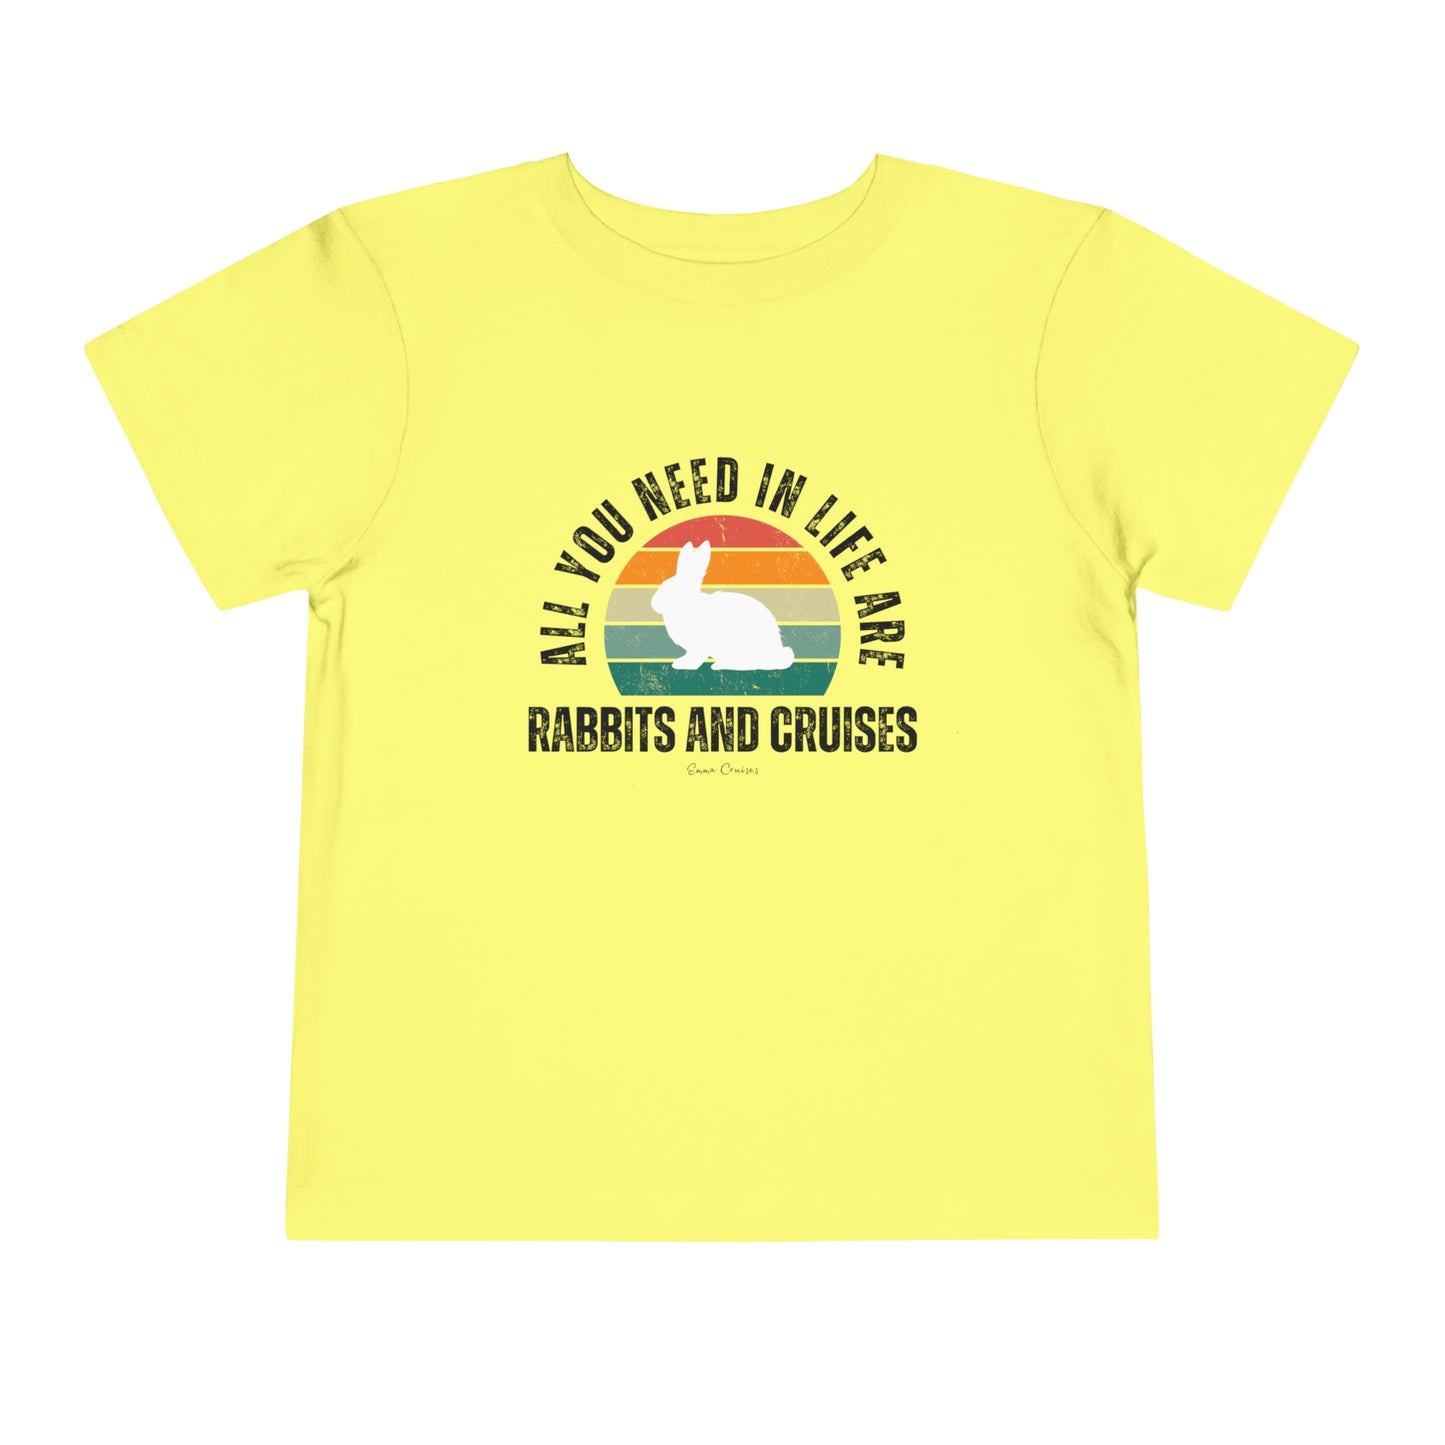 Rabbits and Cruises - Toddler UNISEX T-Shirt